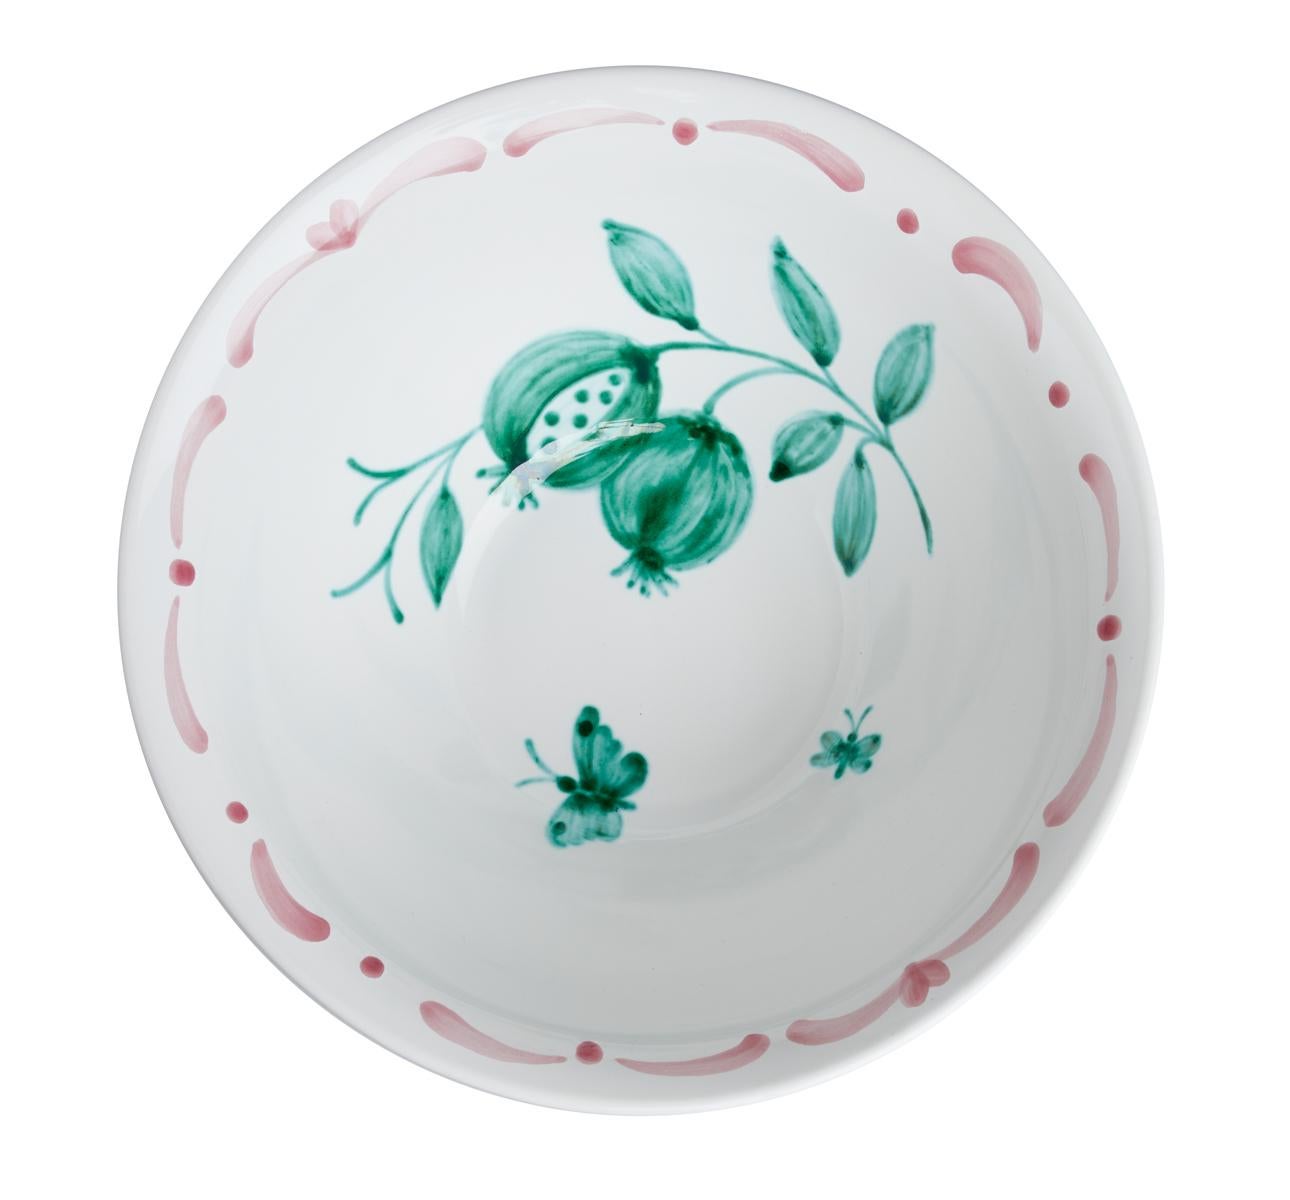 Country Large Salad Bowl Hand-Painted Ceramic Sofina Boutique Kitzbühel Austria For Sale